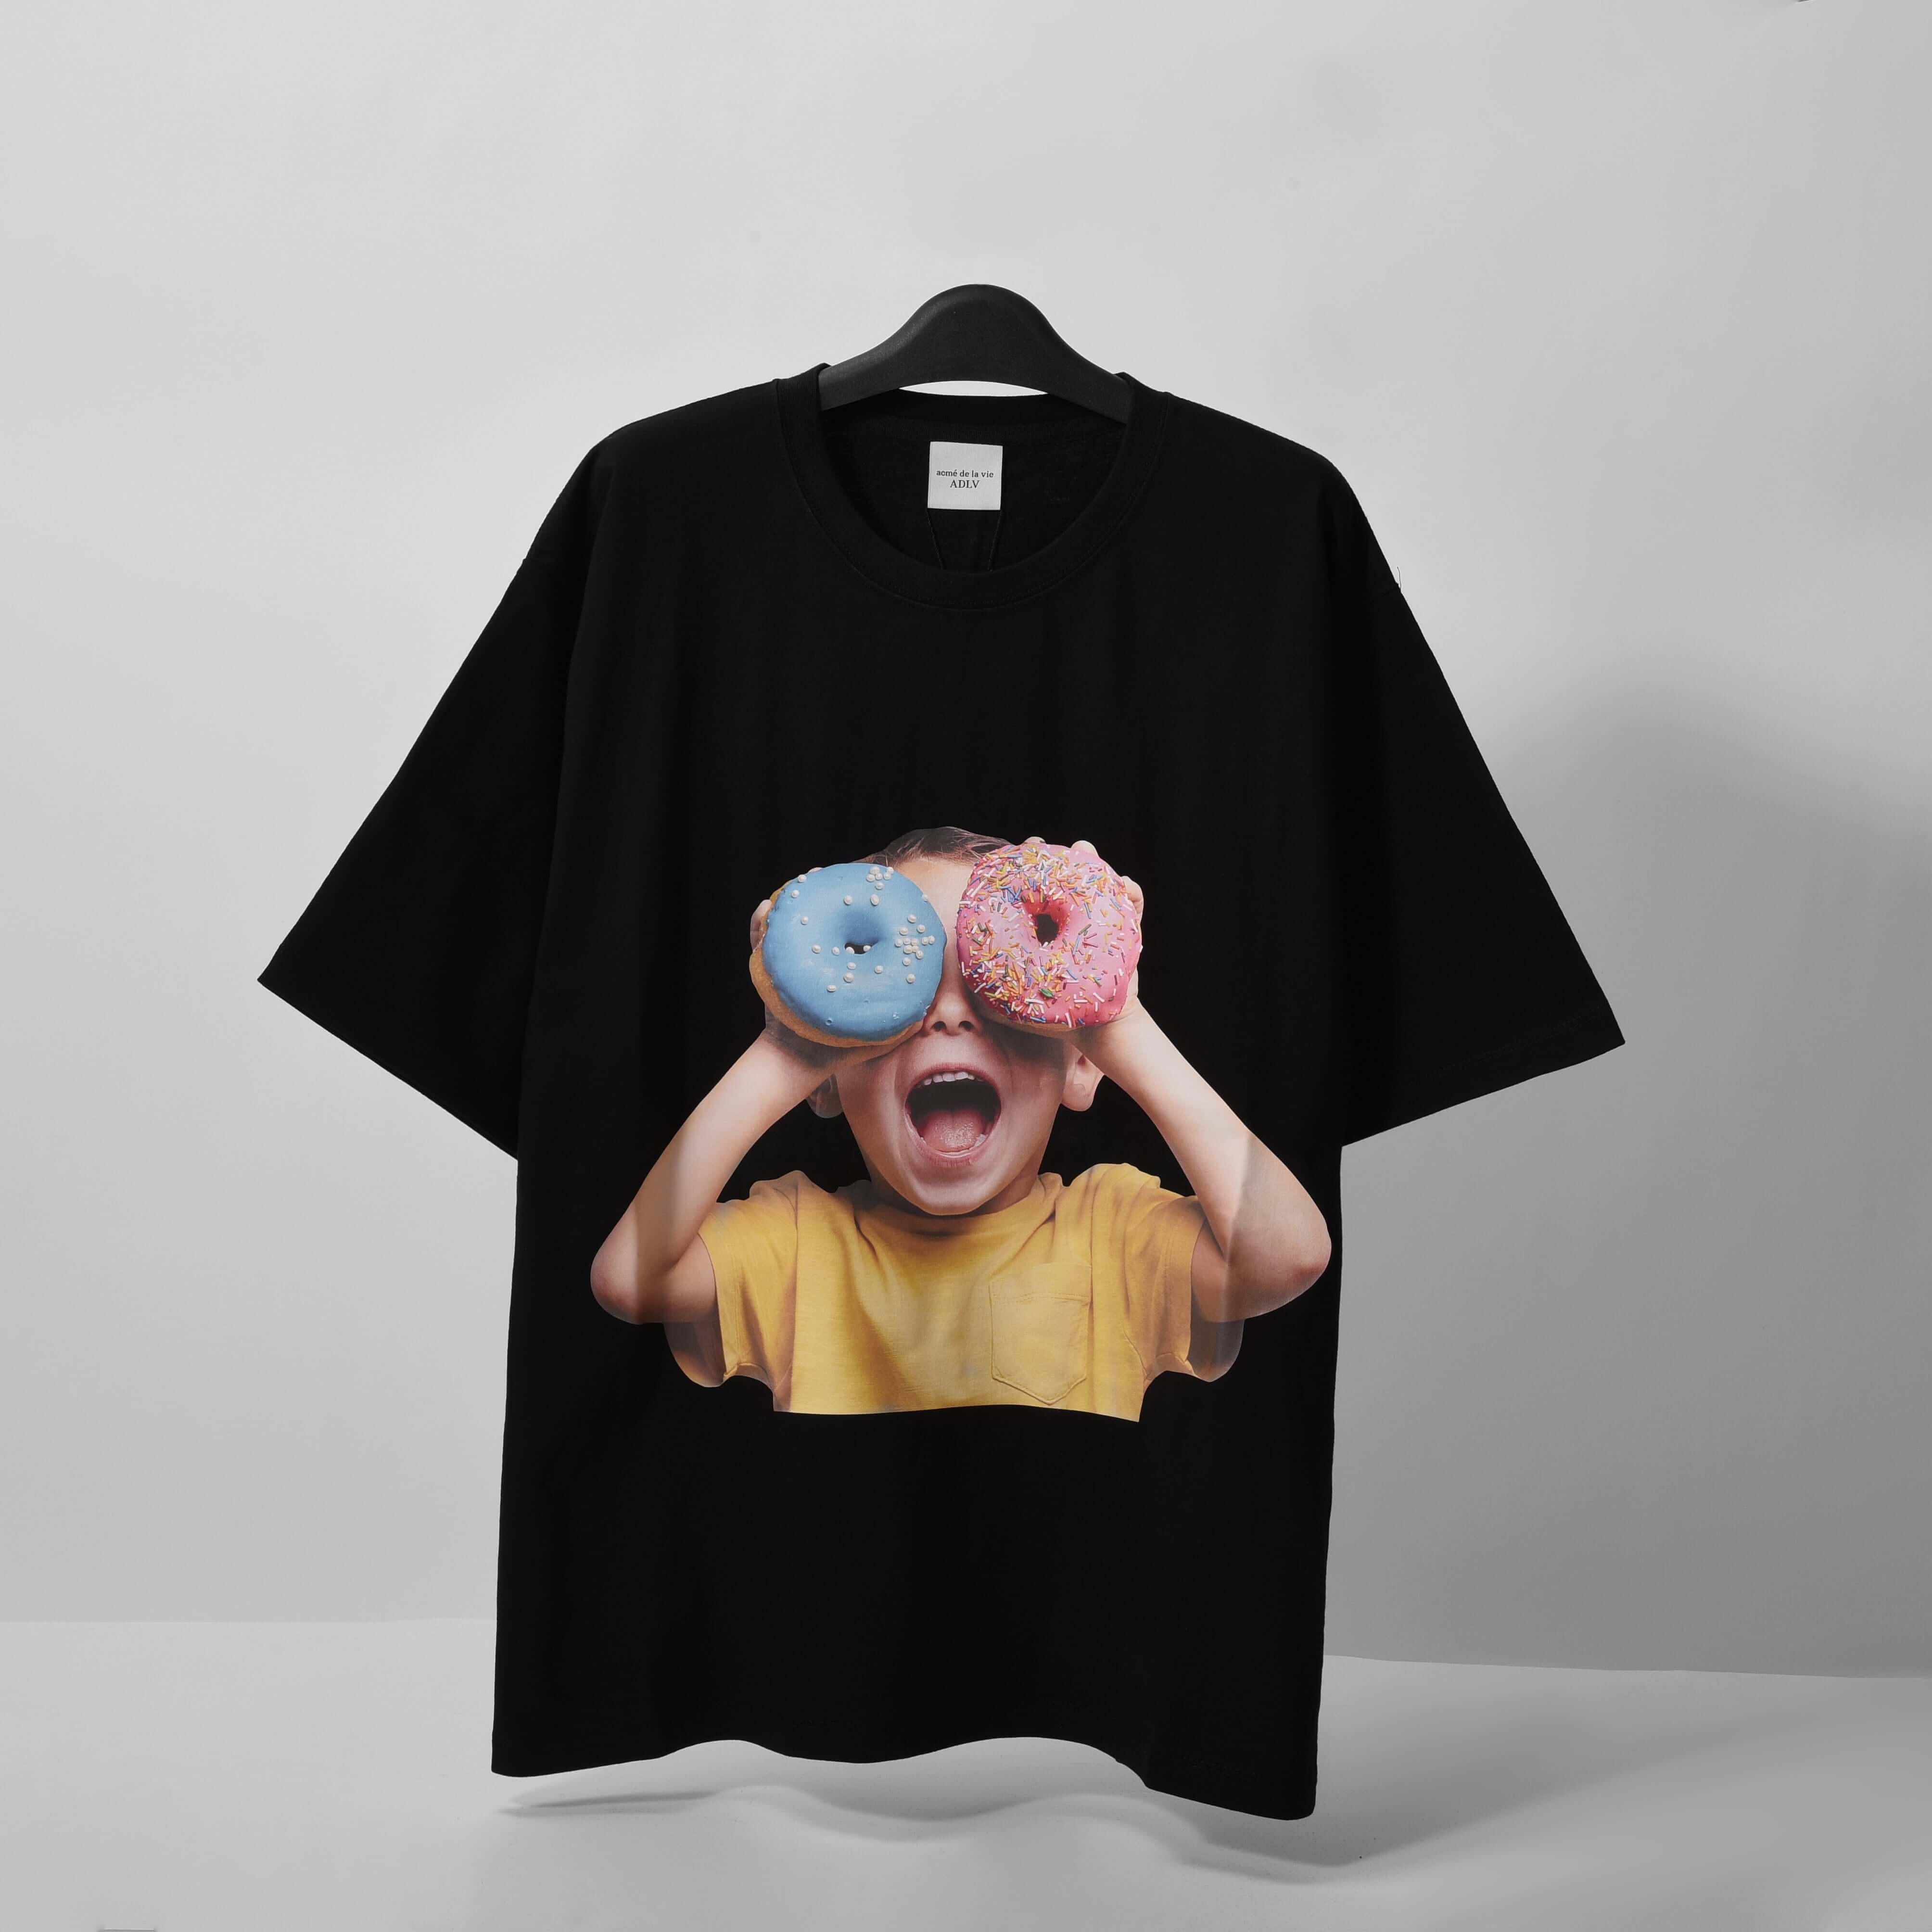 ADLV Donut 5 T-shirt - Black